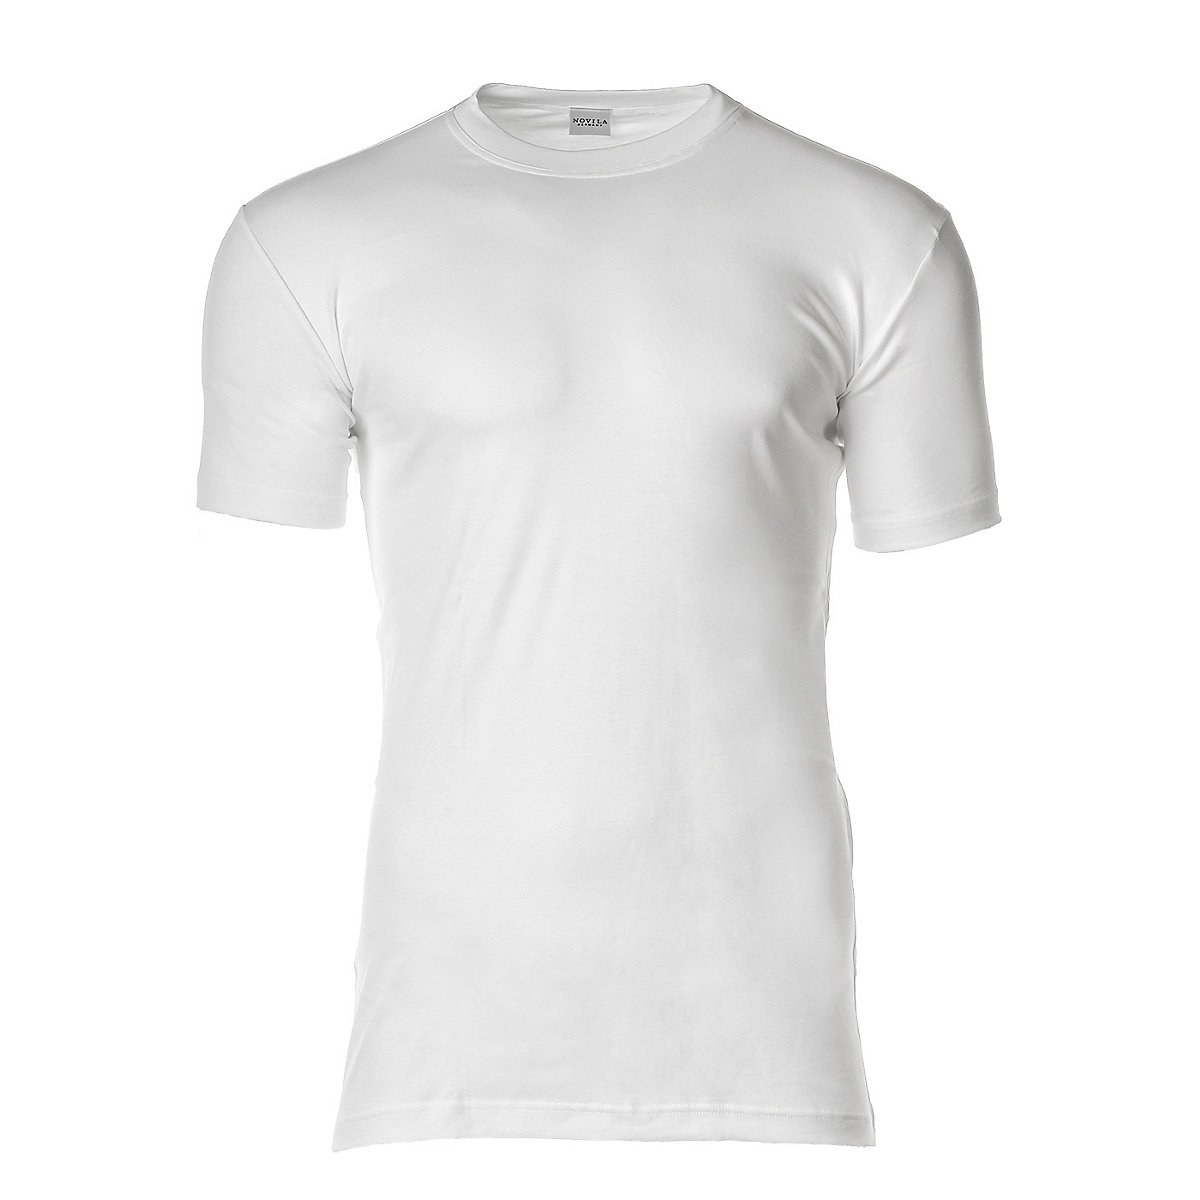 NOVILA Herren American-Shirt Rundhals Natural Comfort Feininterlock T-Shirts weiß